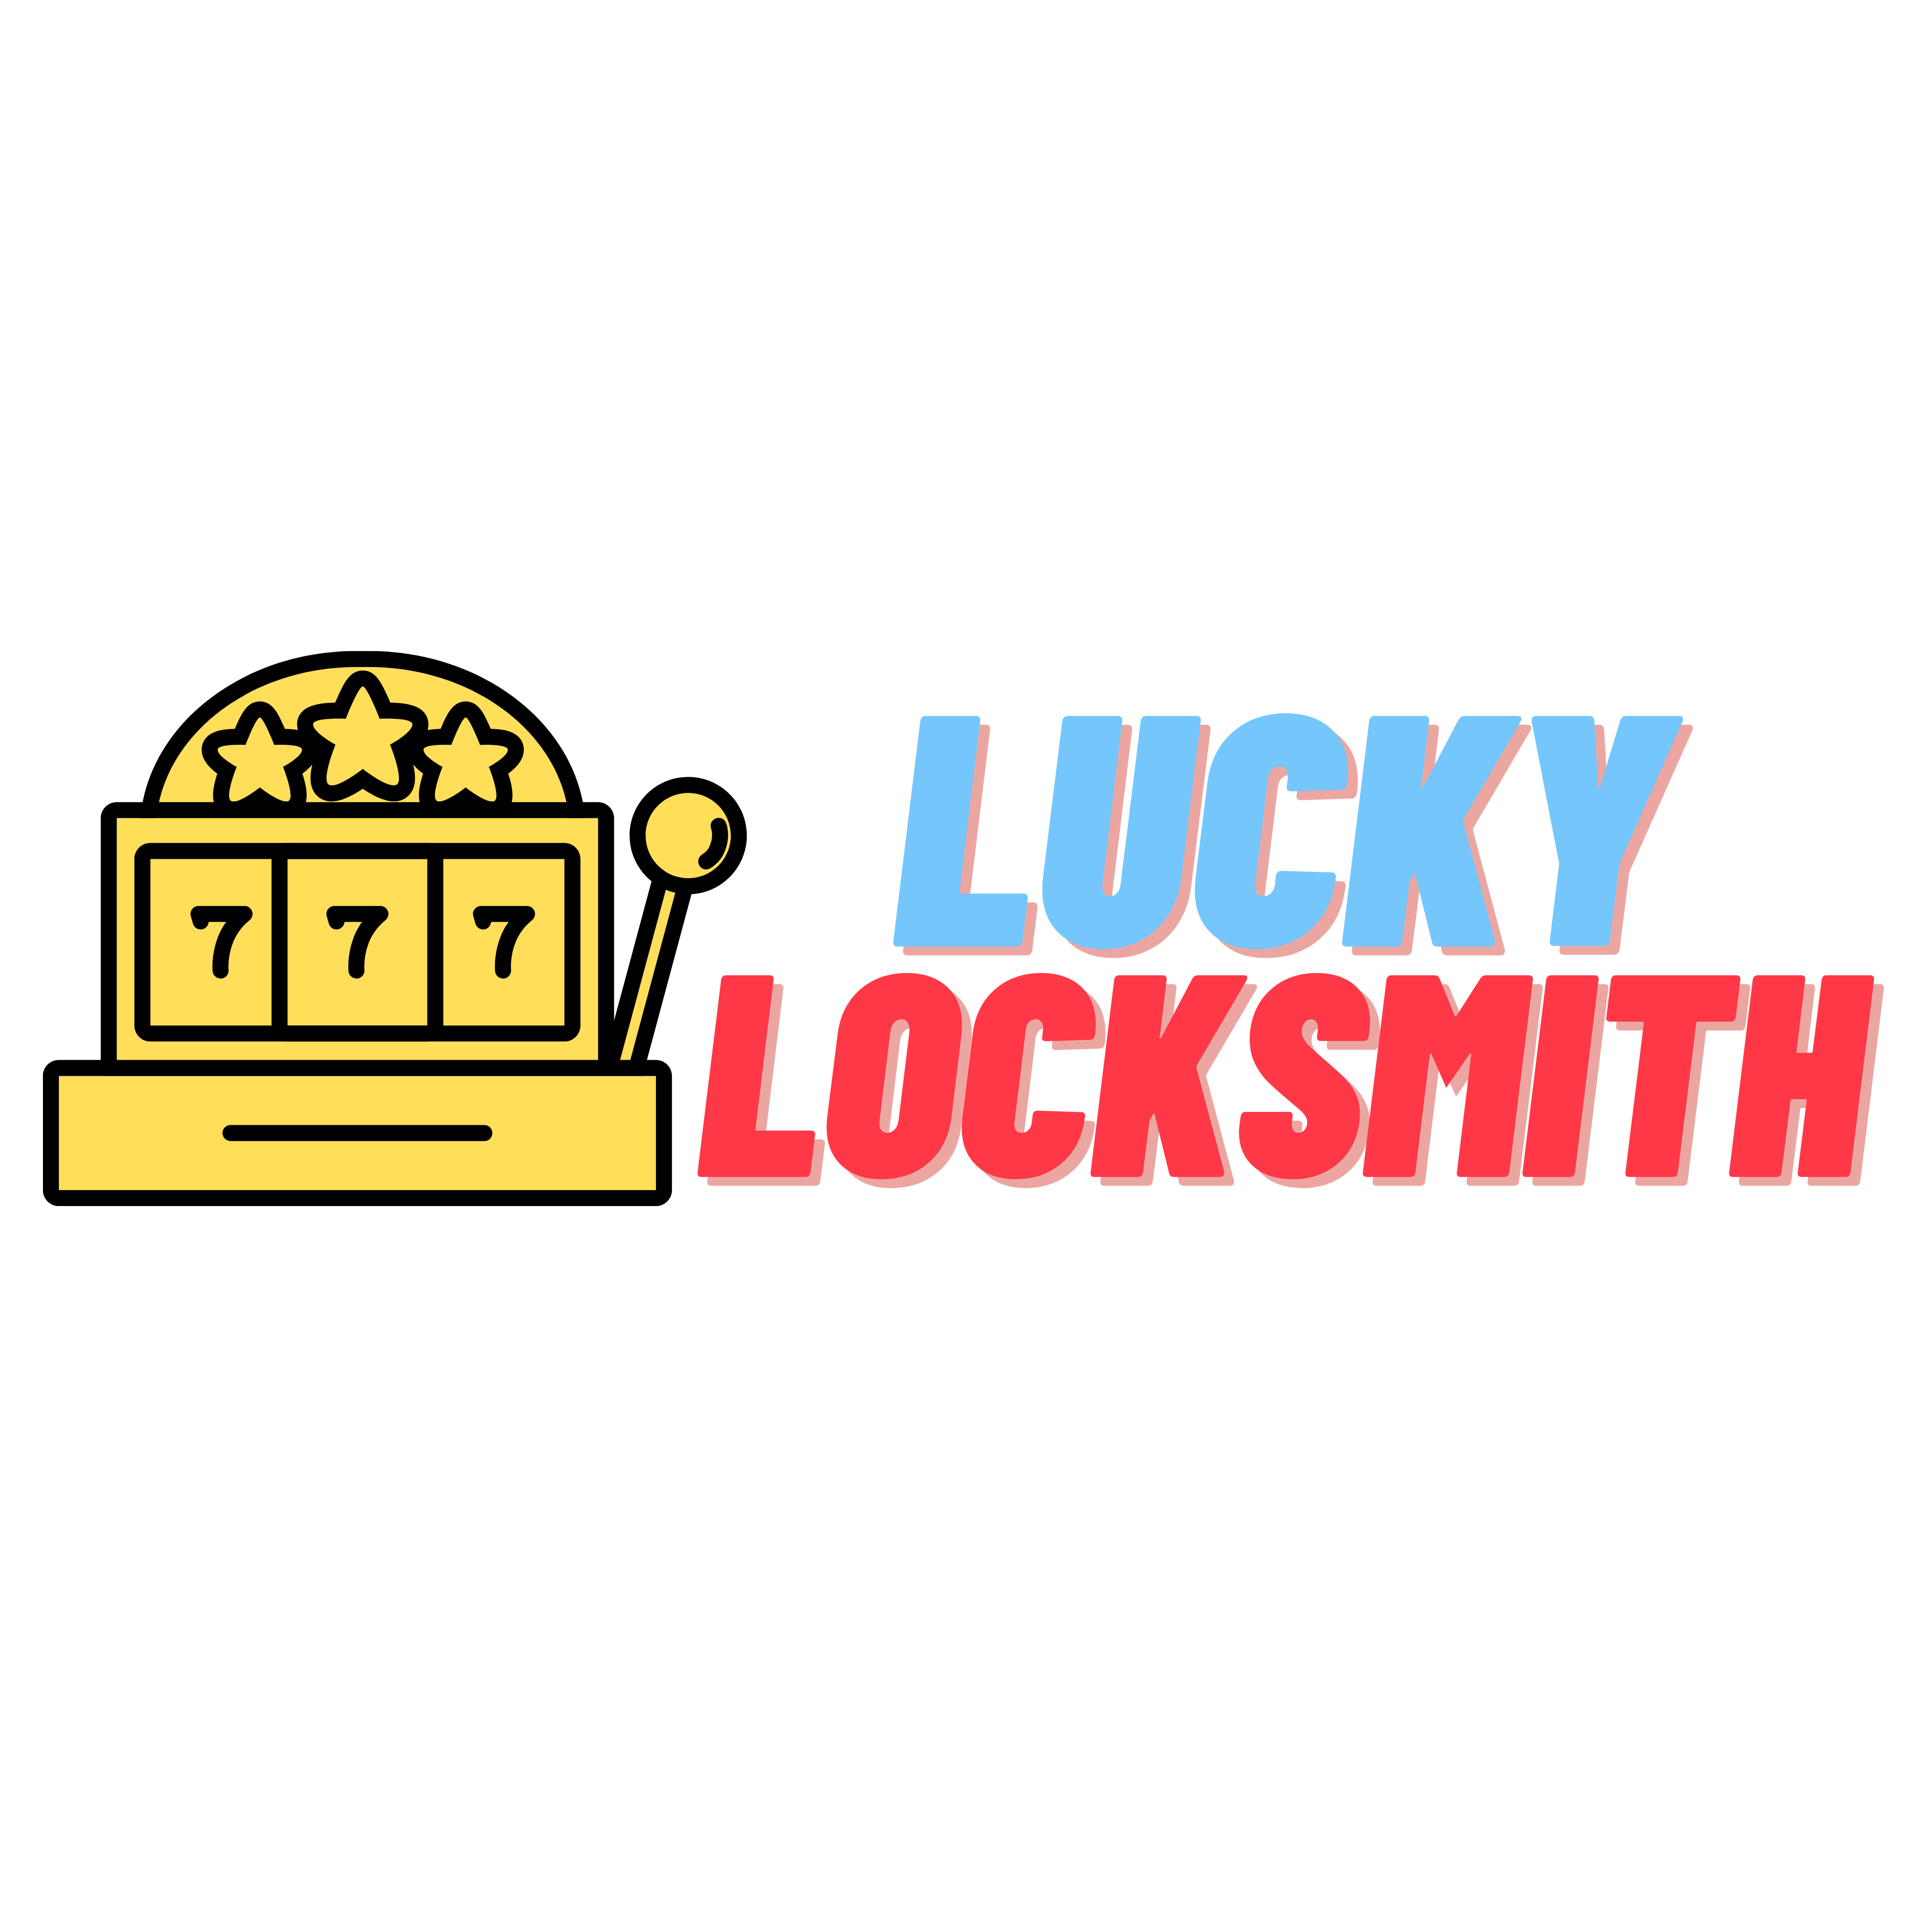 777 lucky locksmith logo